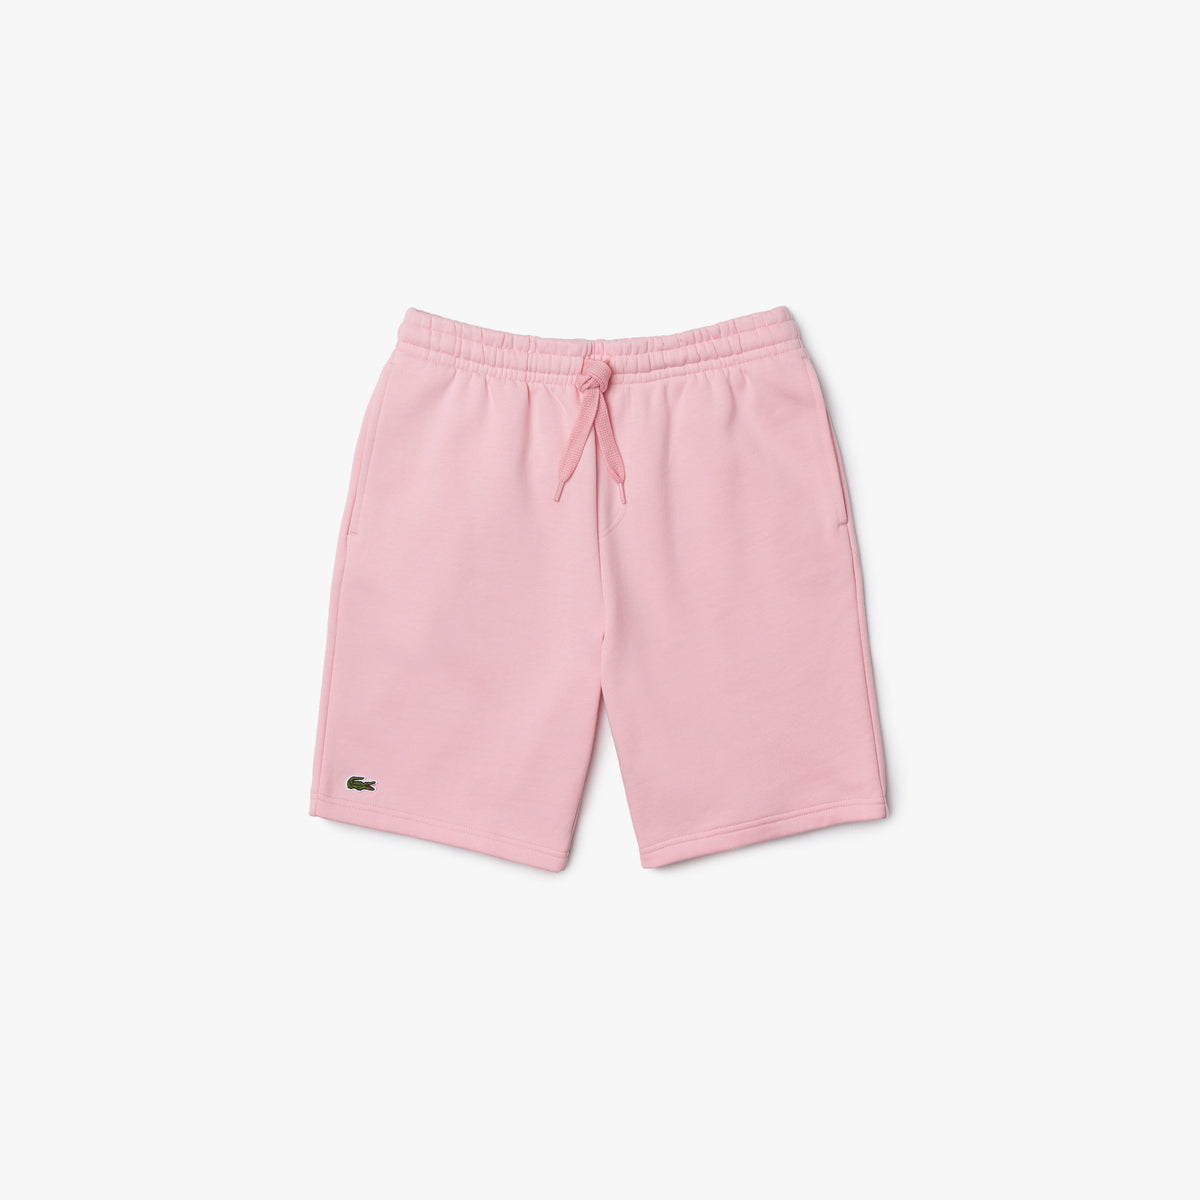 LaCoste-Men's Sport Tennis Fleece Shorts - Pink